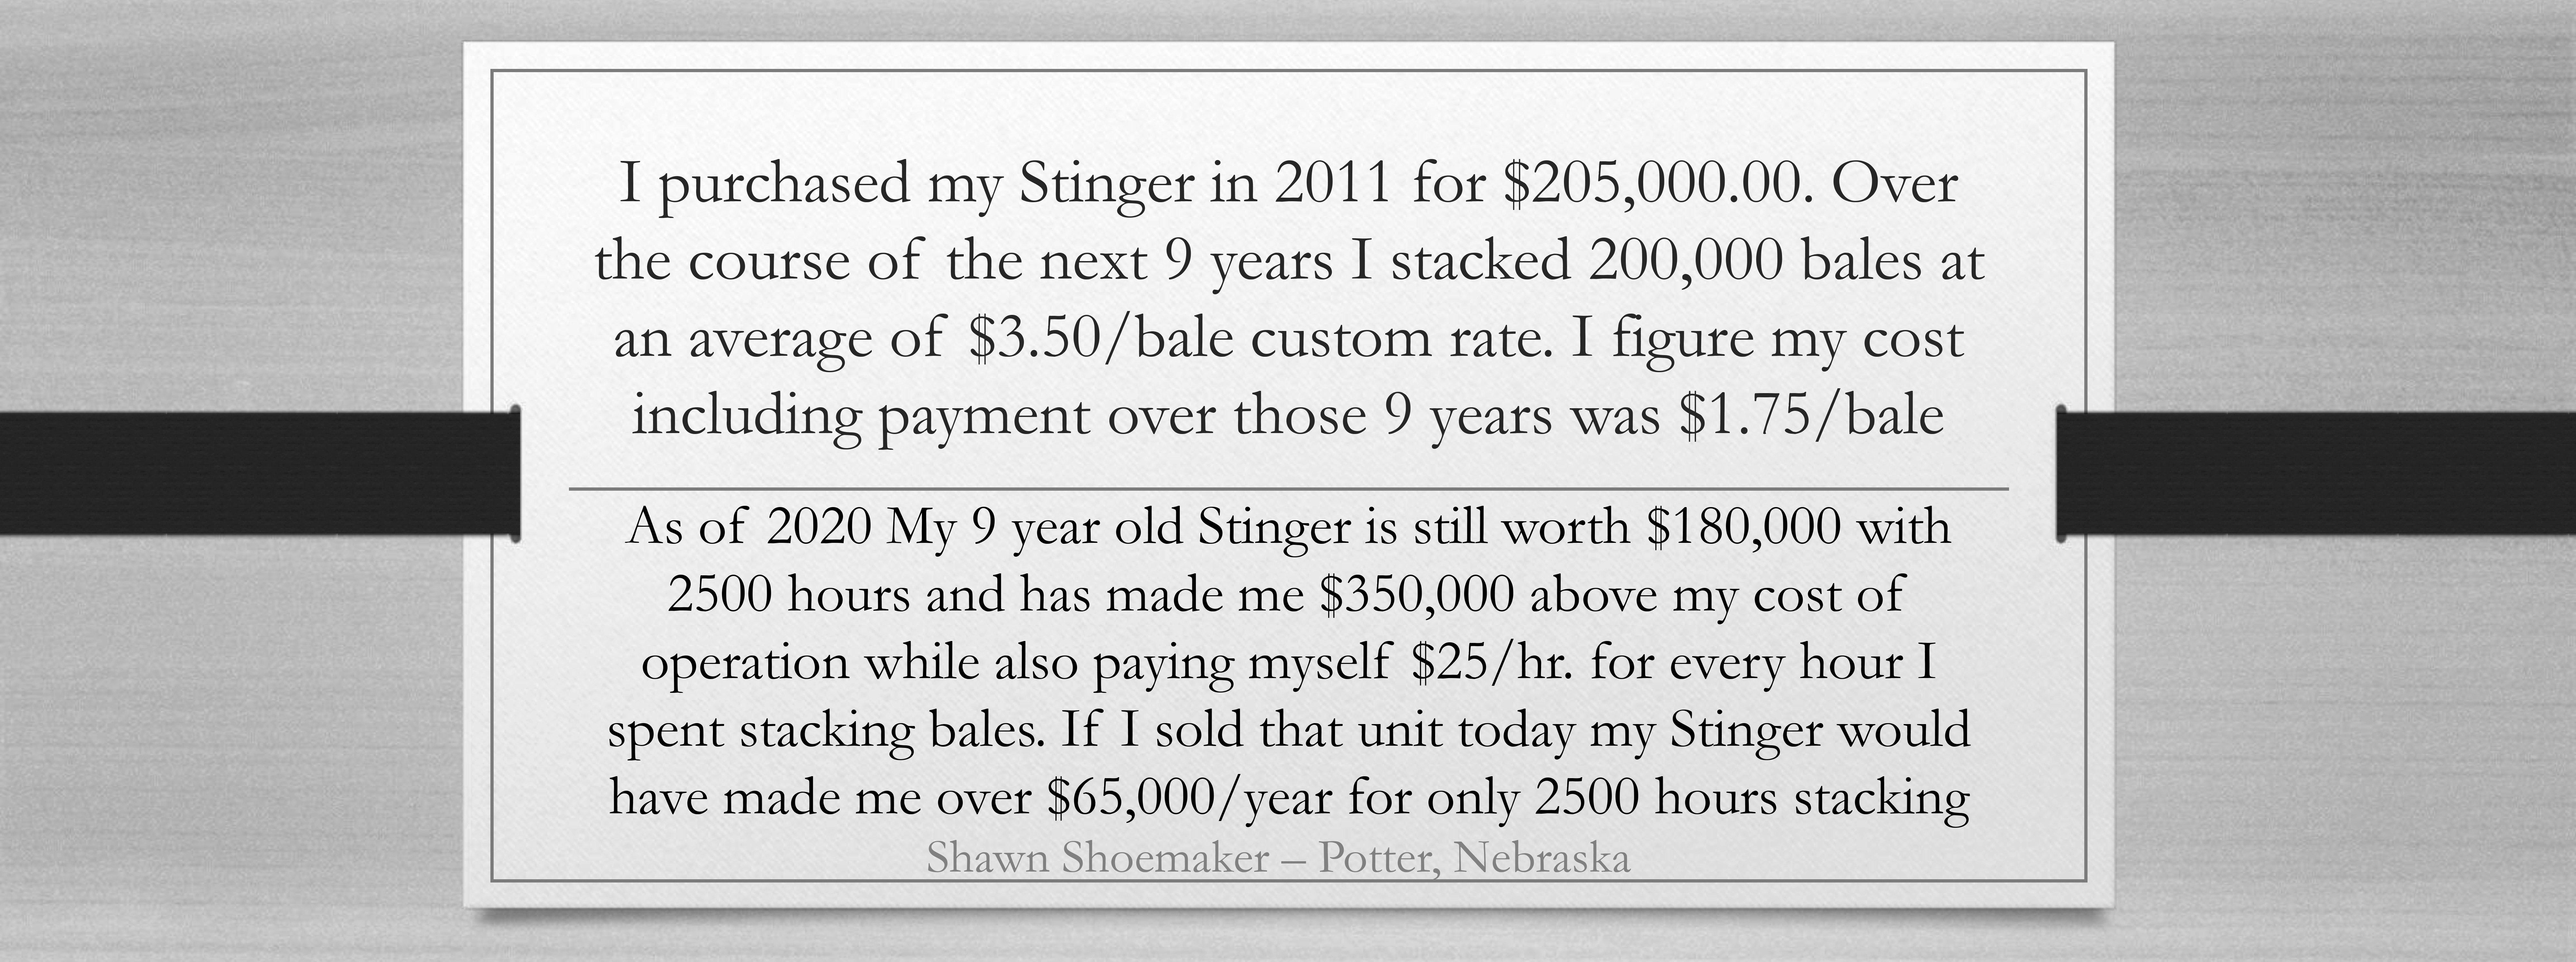 shawn shoemaker stinger cost